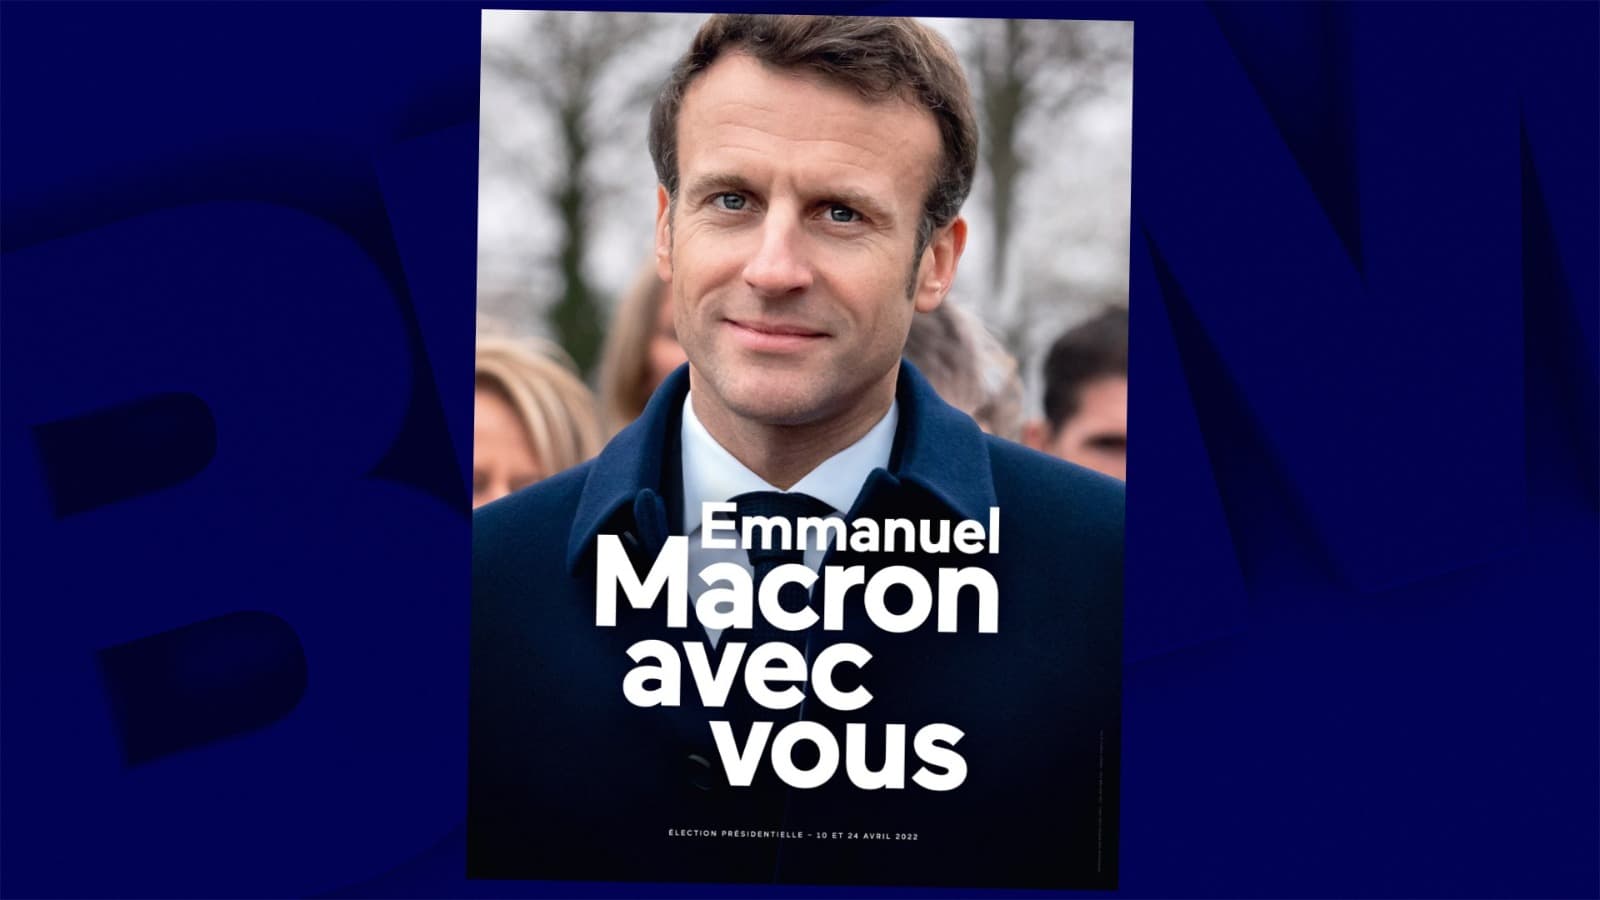 https://images.bfmtv.com/GyDwgwuRpulOcdTal2xdOrlxQCI=/0x0:1600x900/1600x0/images/L-affiche-de-campagne-d-Emmanuel-Macron-a-ete-devoilee-ce-samedi-1363259.jpg